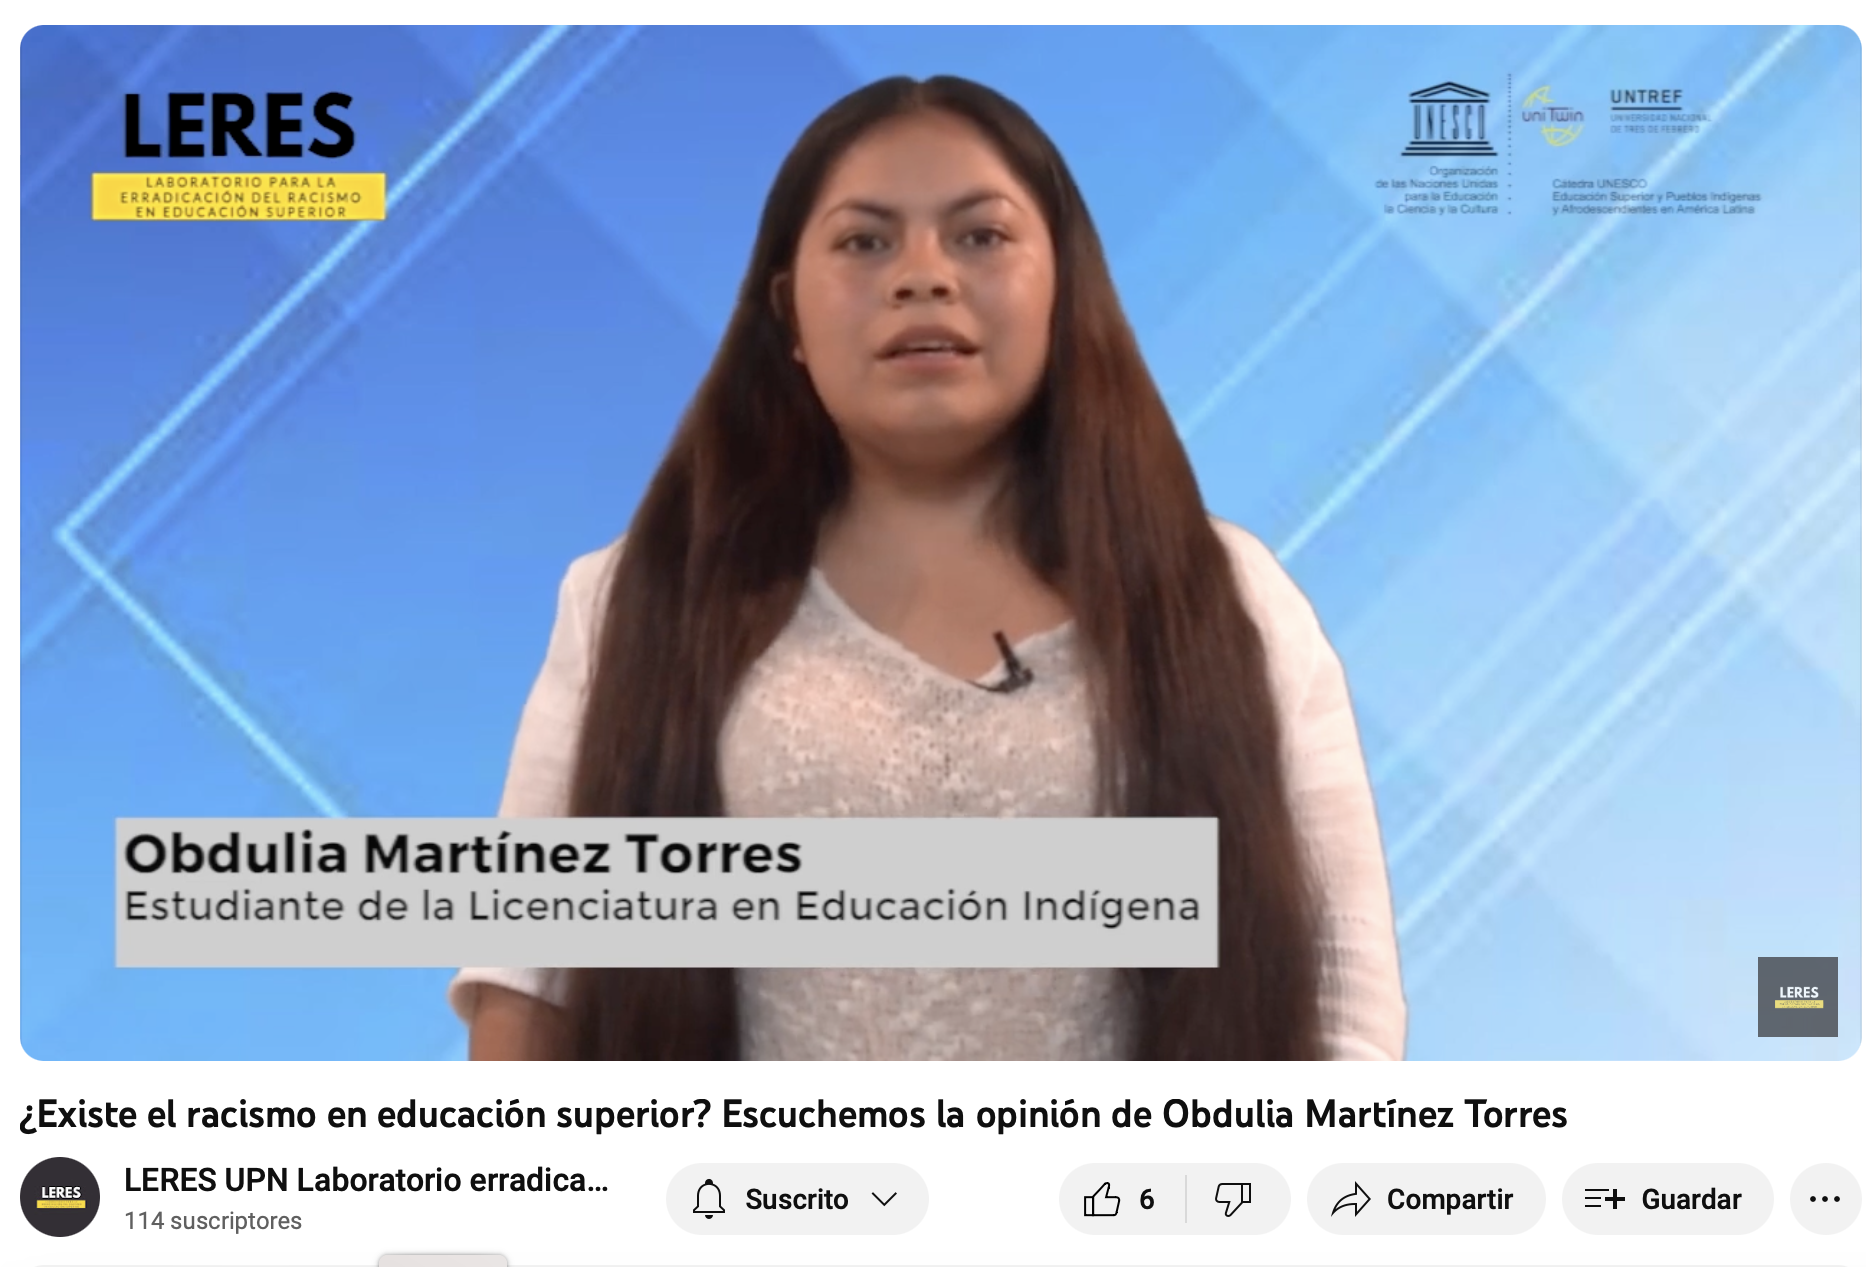 Obdulia Martinez Torres